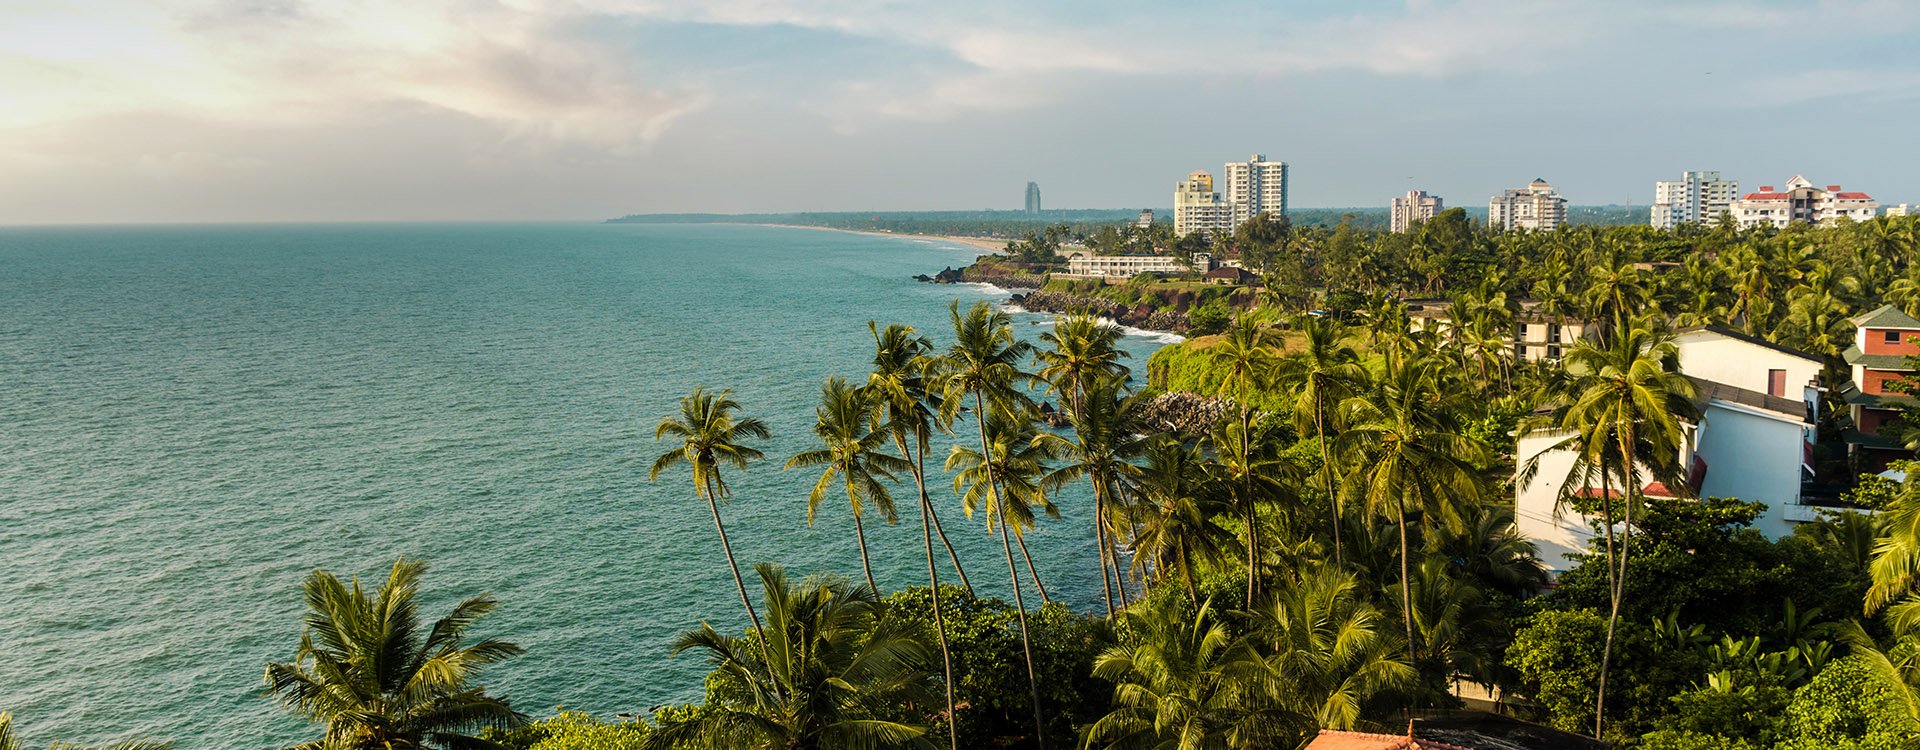 Kannur Lighthouse, Coconut trees and colorful beach with cloudy sky, Kerala